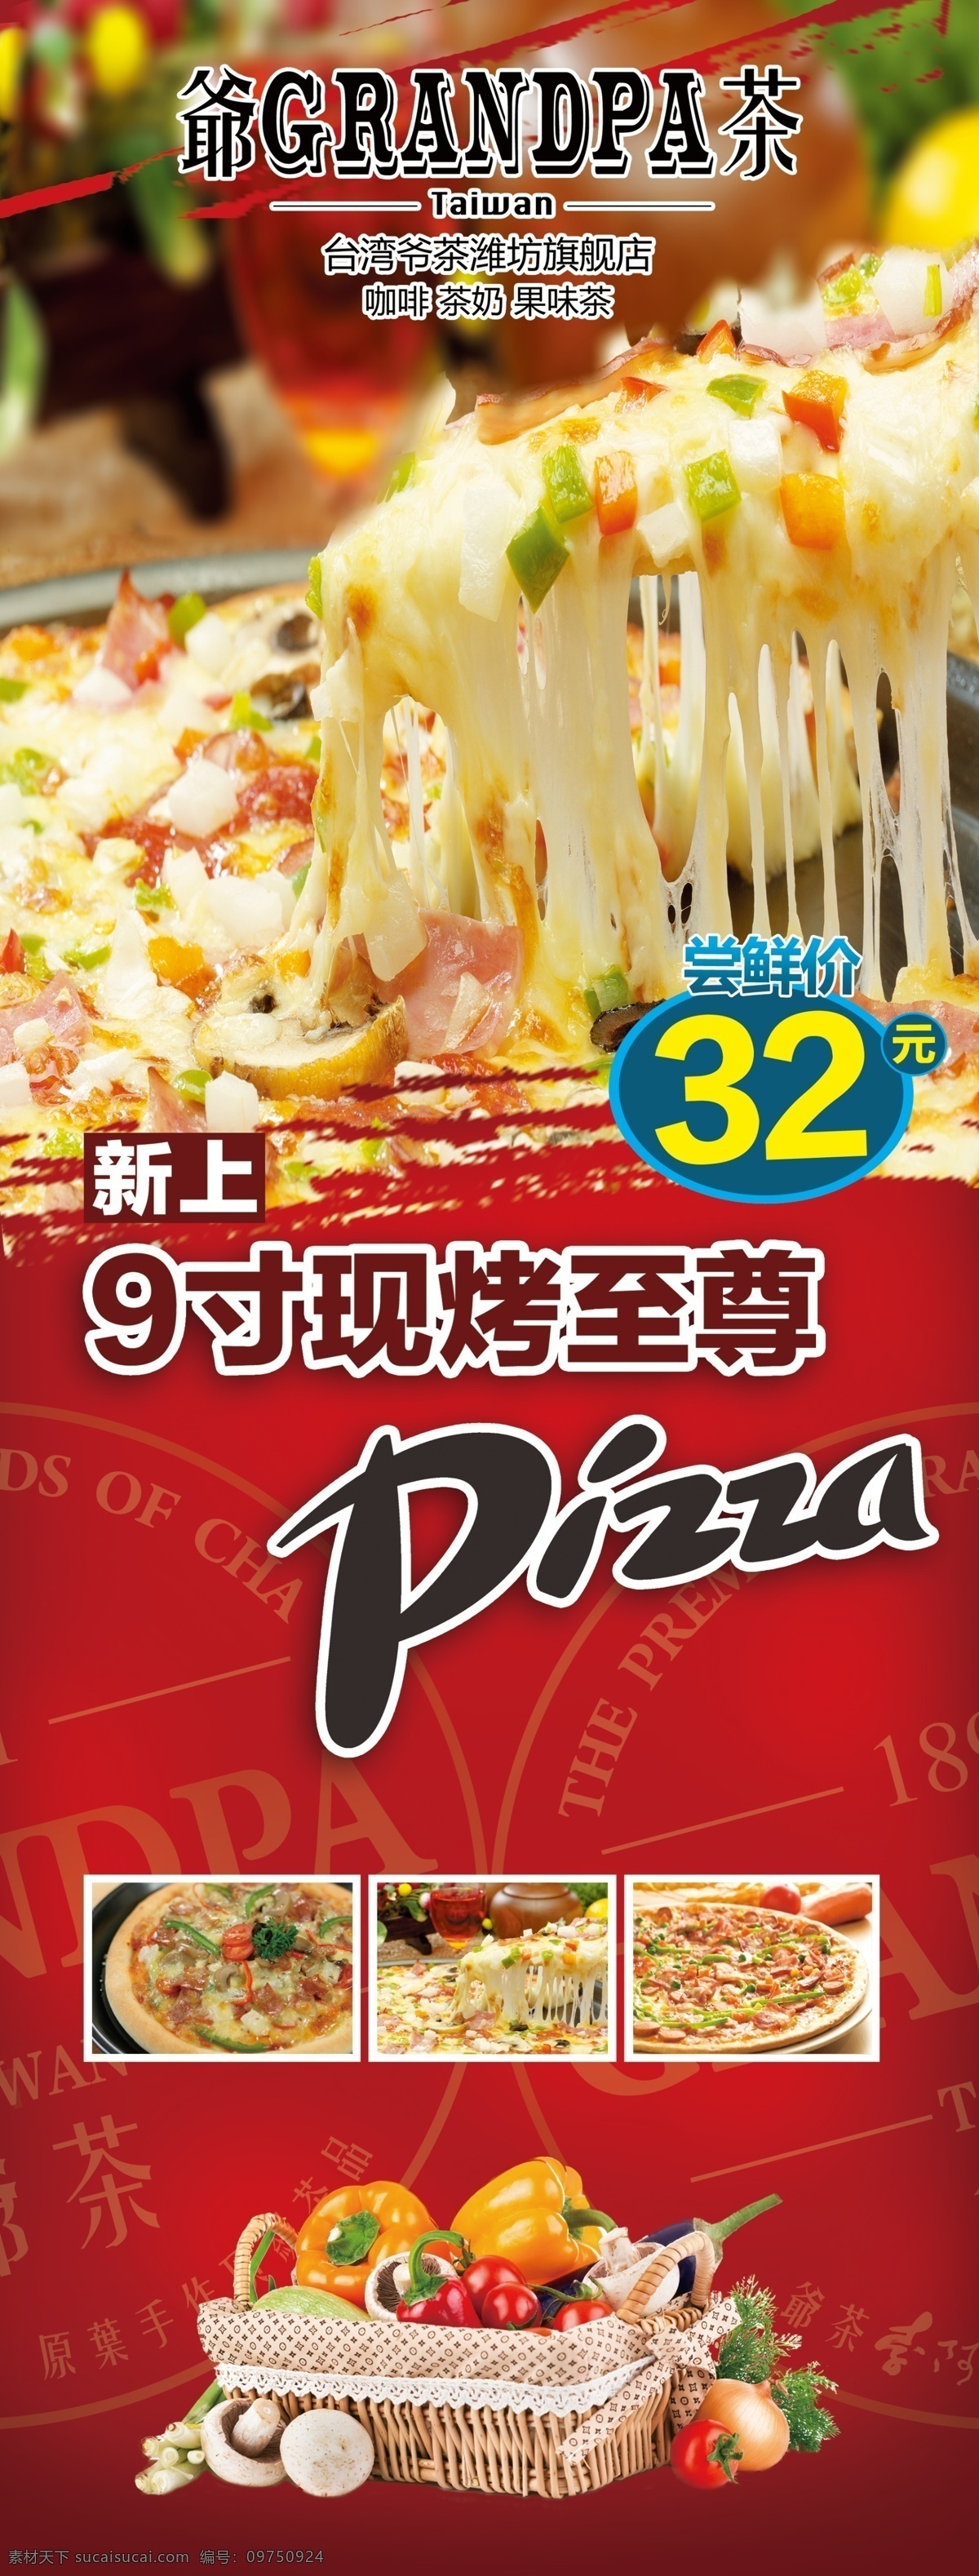 pizza 展架 超级至尊披萨 培根披萨 披萨 蔬果 红色背景 展板模板